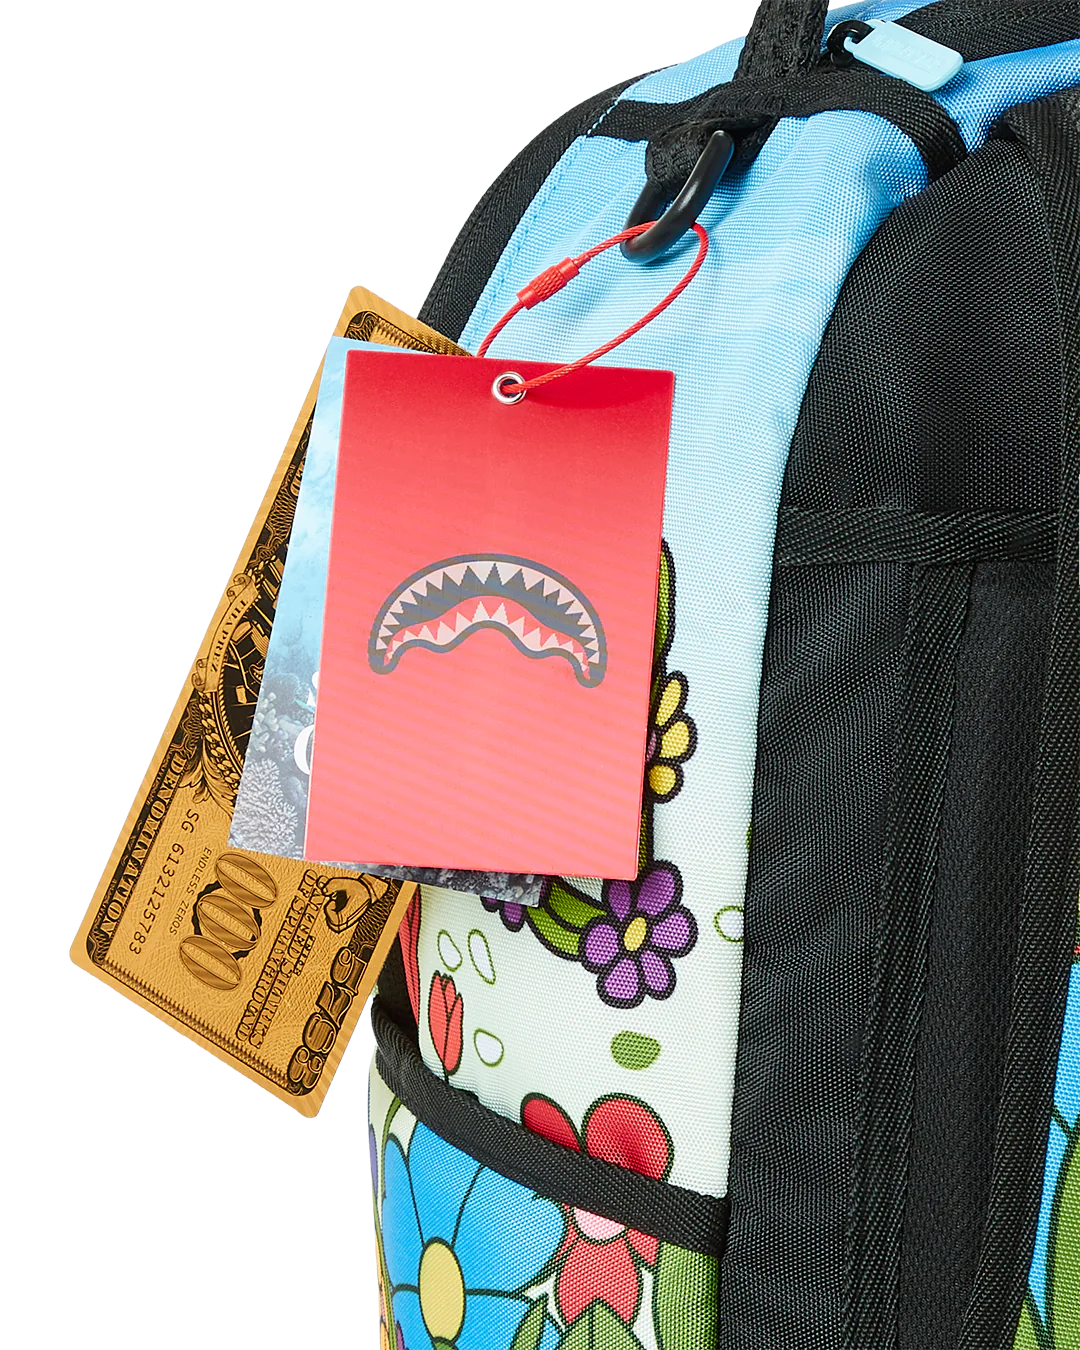 Sprayground Crayon Shark Backpack